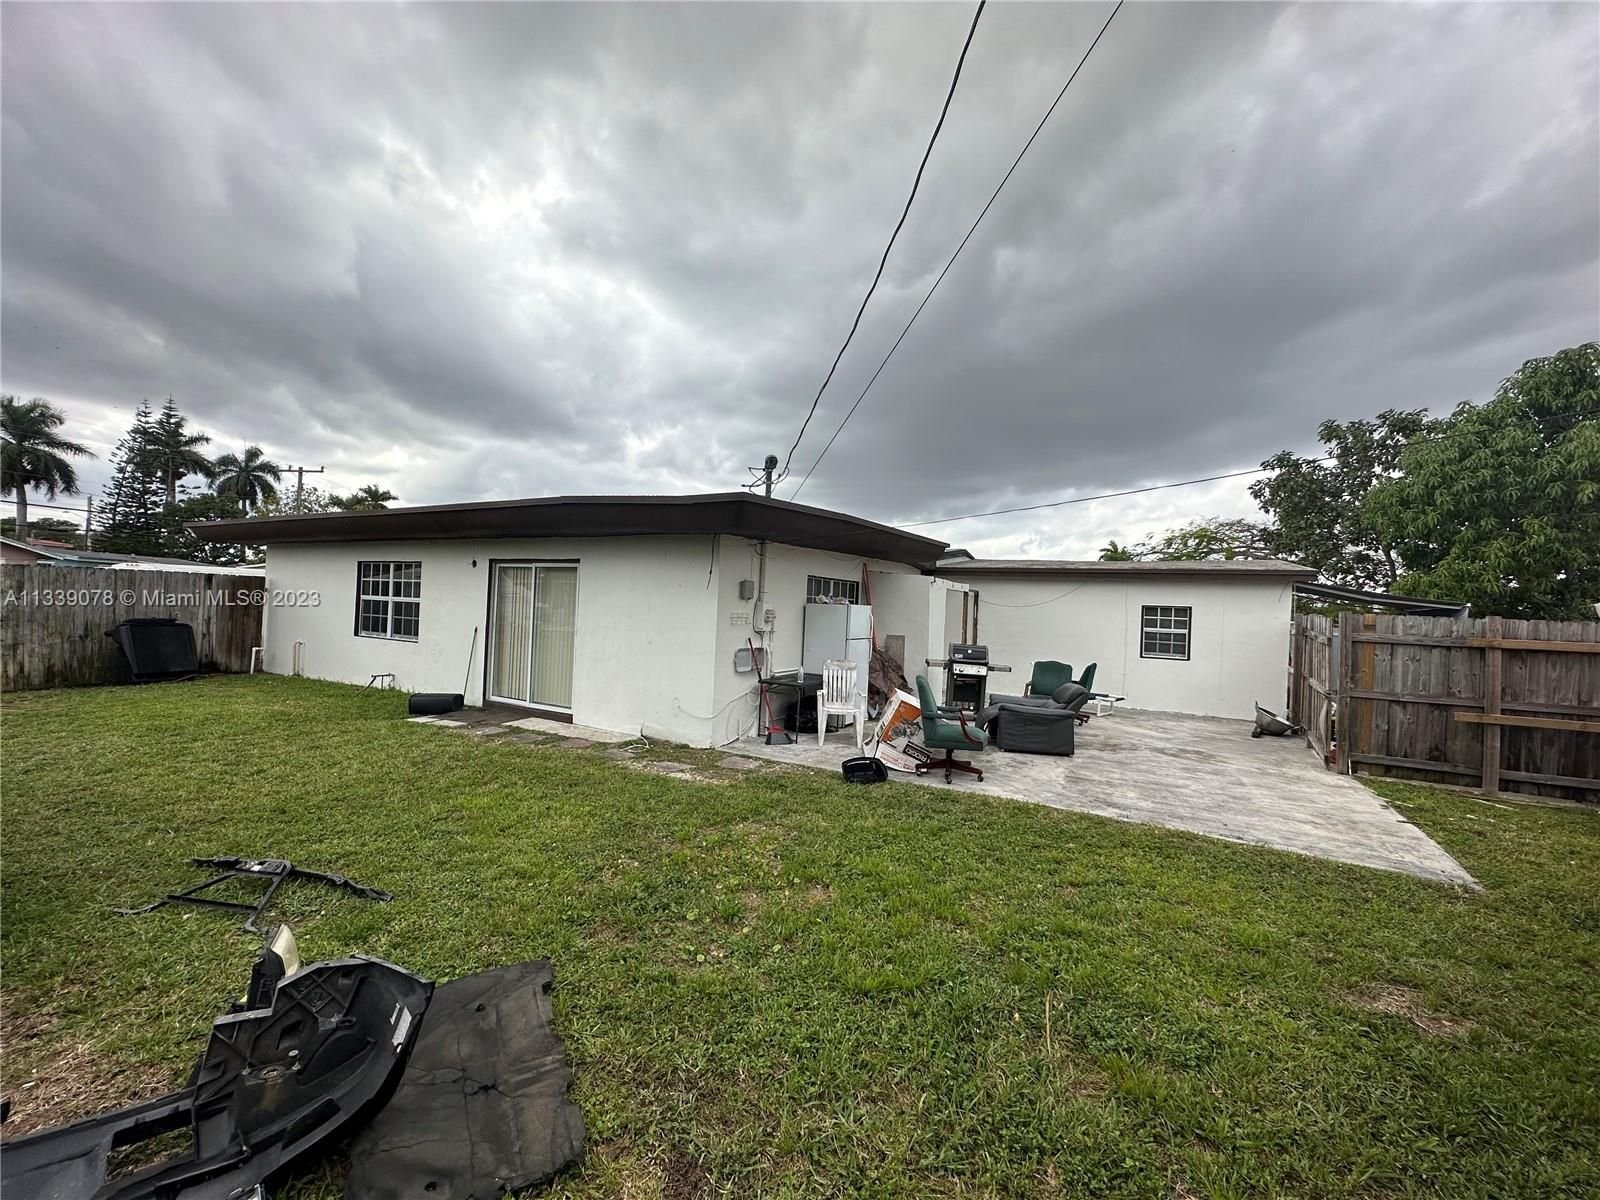 Real estate property located at 11210 47th St, Miami-Dade County, Miami, FL